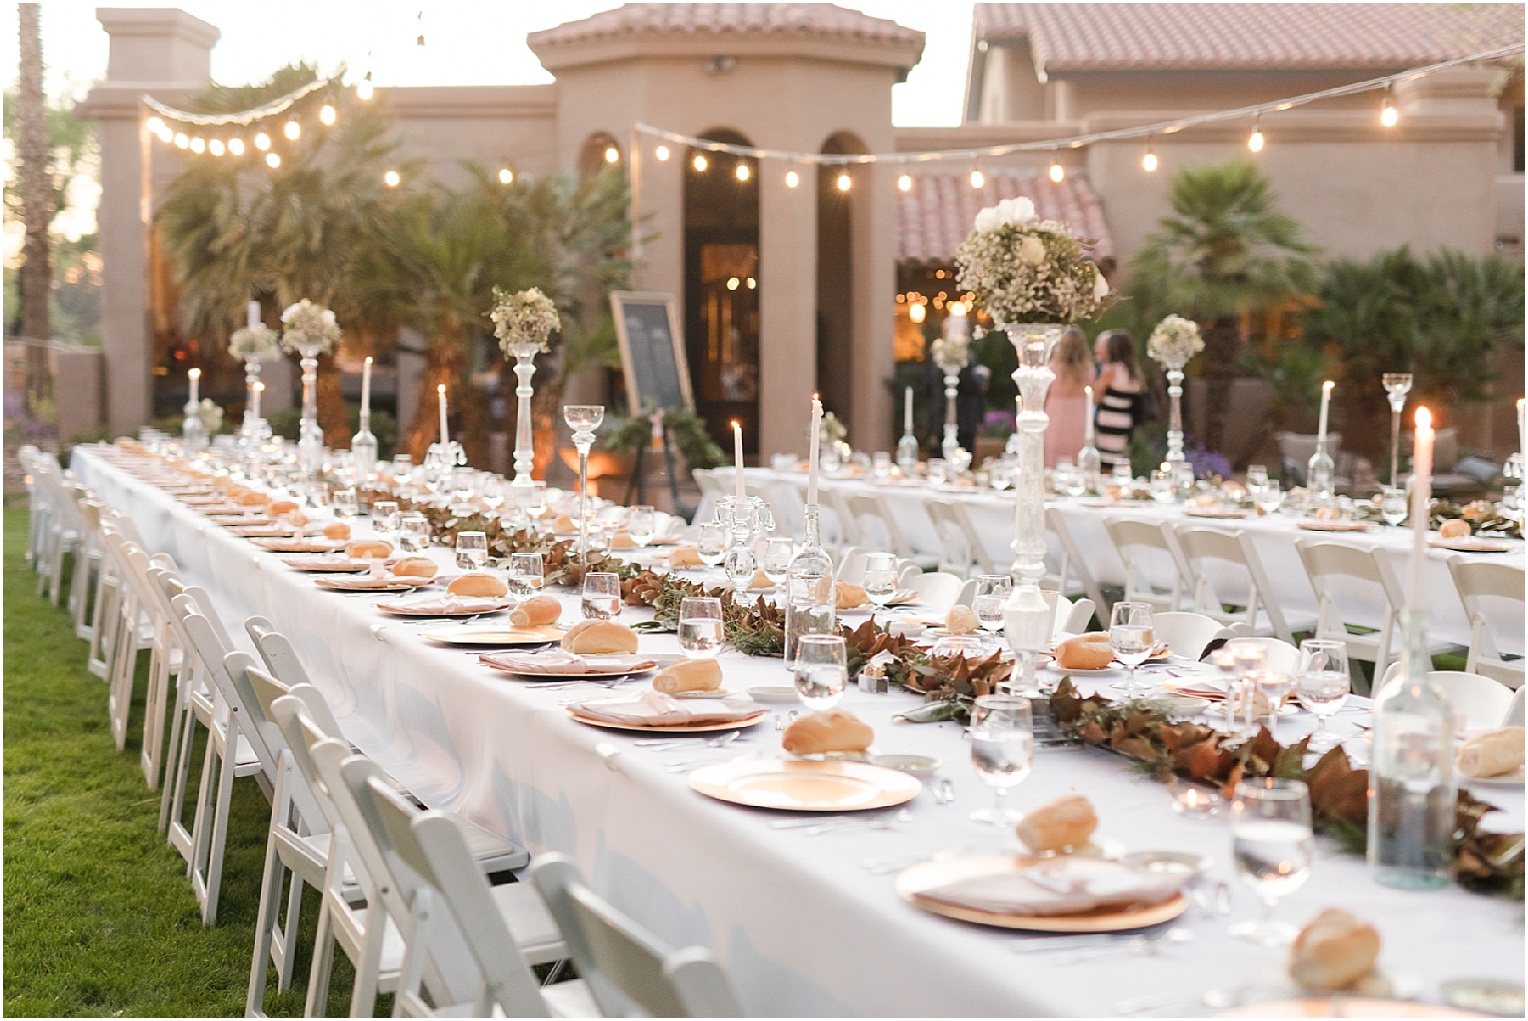 Intimate Backyard Wedding Tucson, AZ Chanel + Eddie outdoor reception details with strand lighting